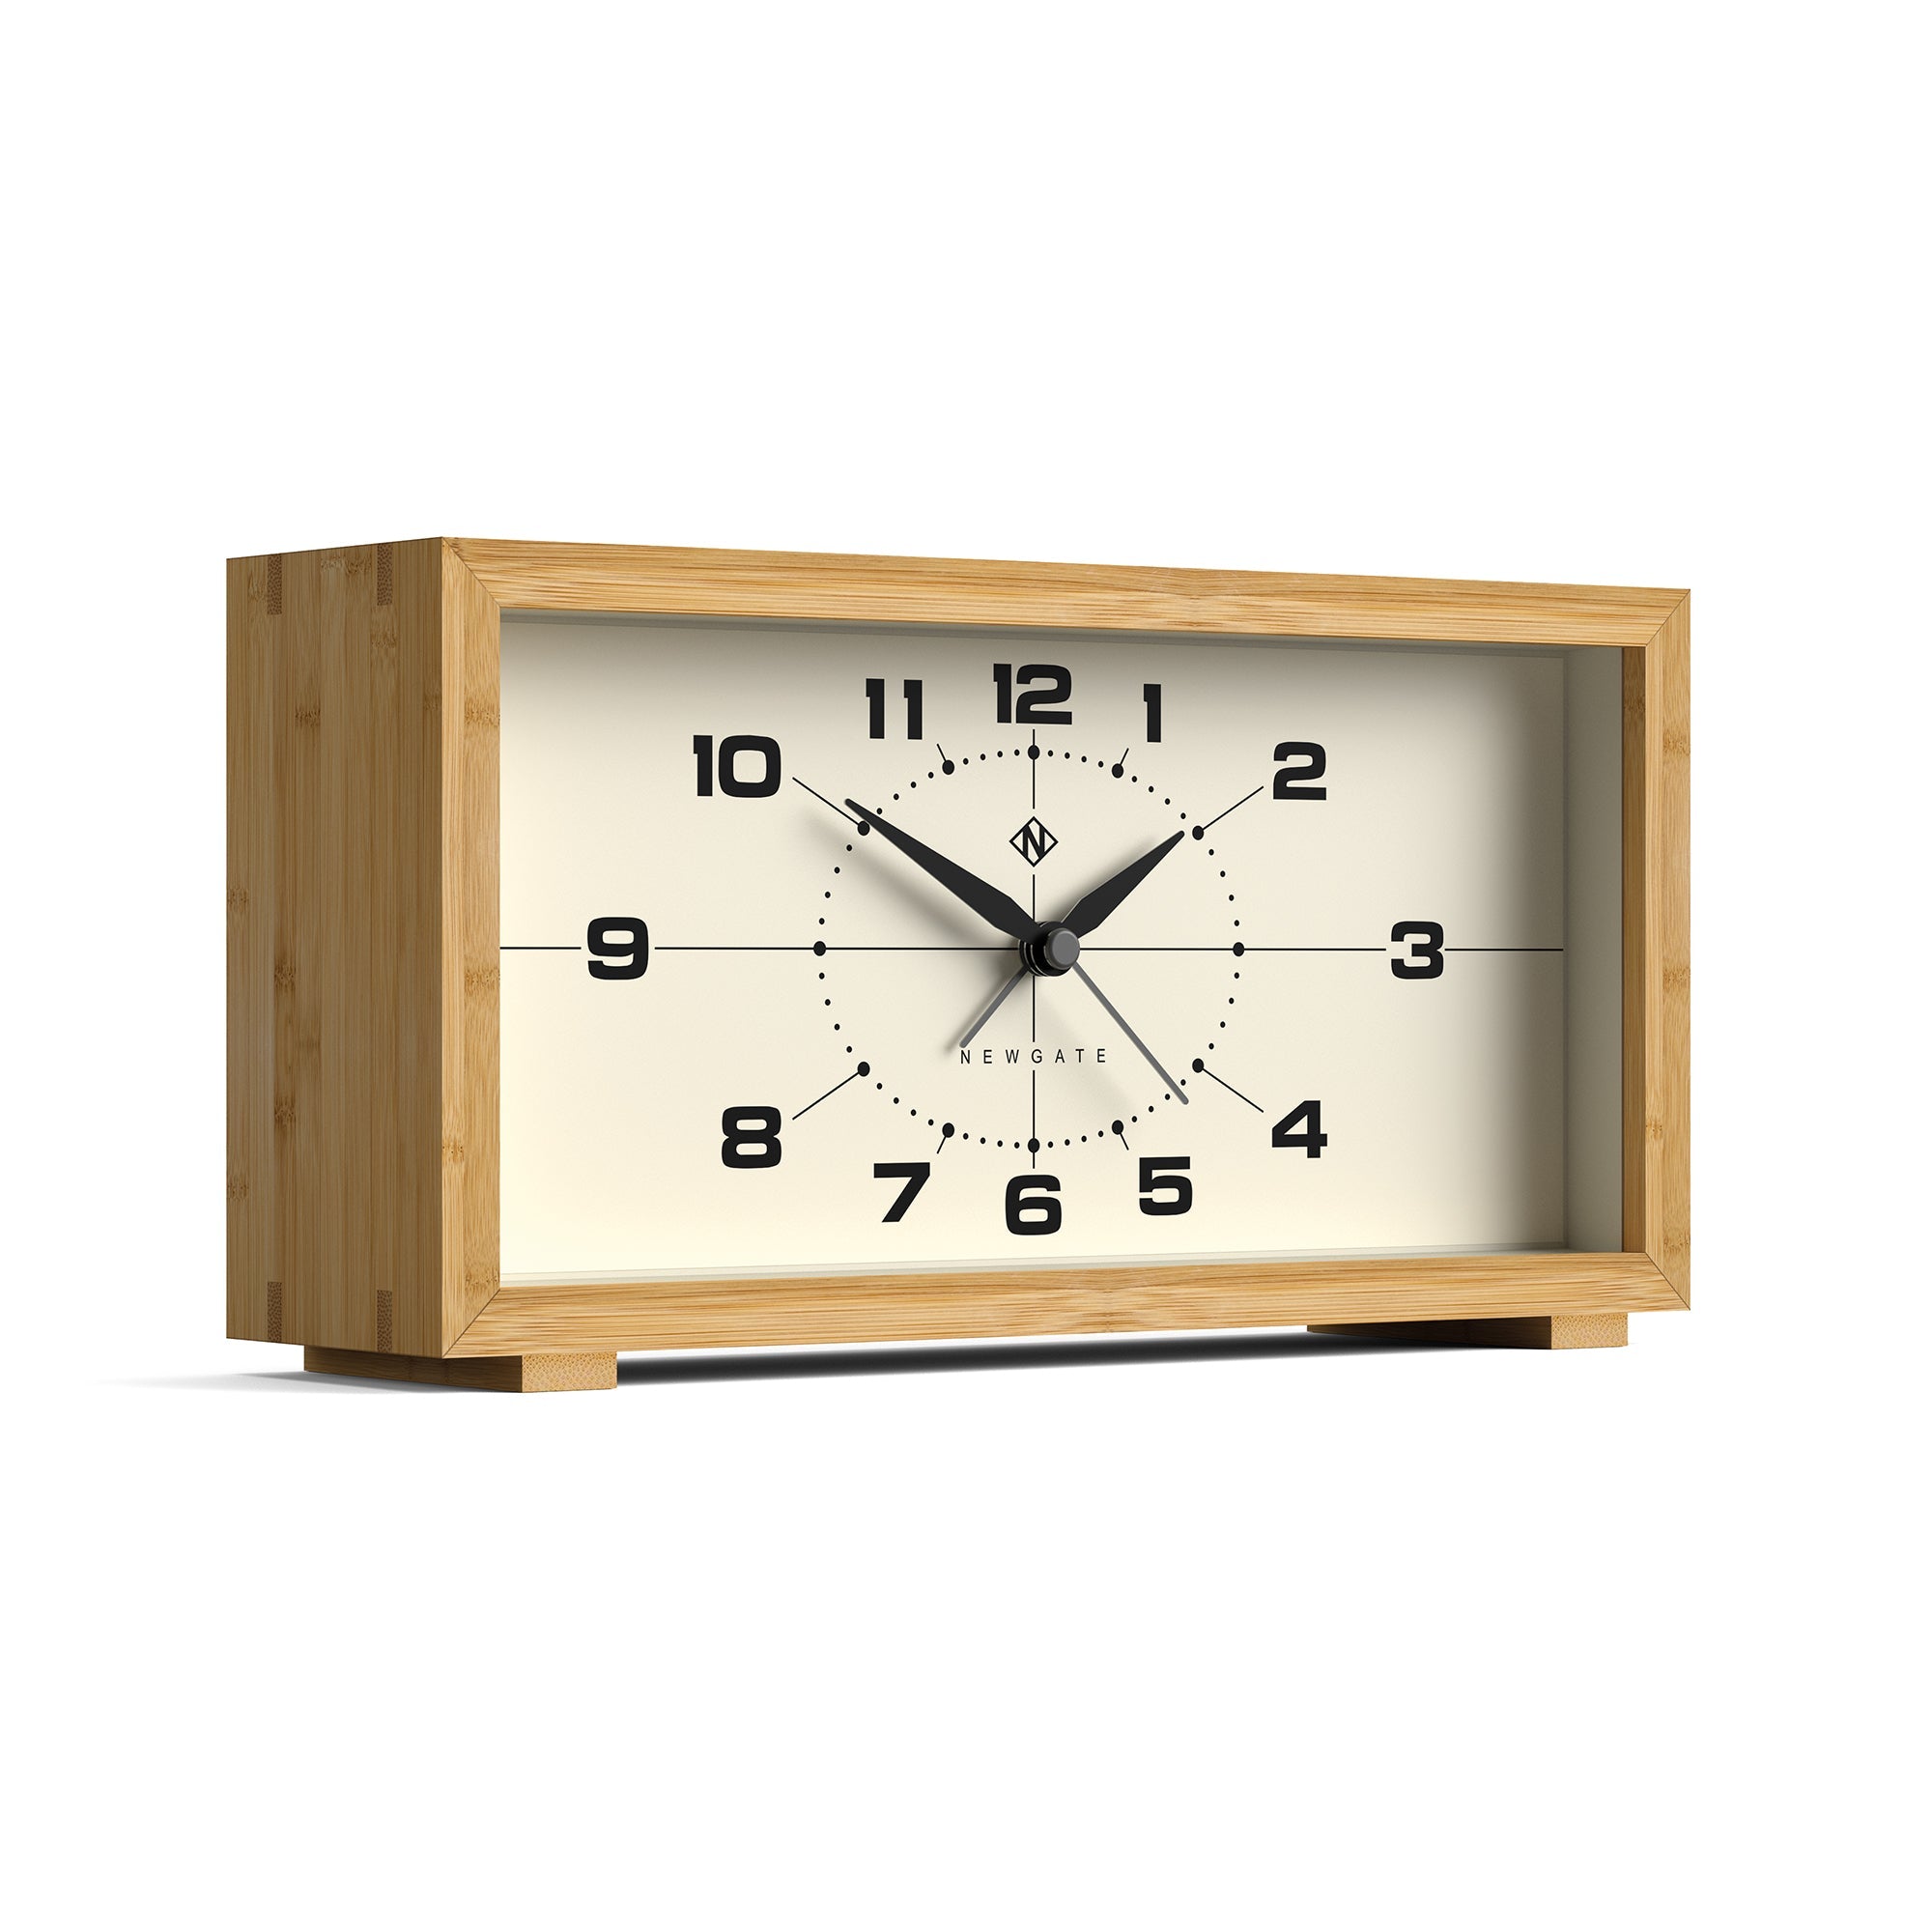 Newgate Lemur Alarm Clock - Retro-Inspired Arabic dial